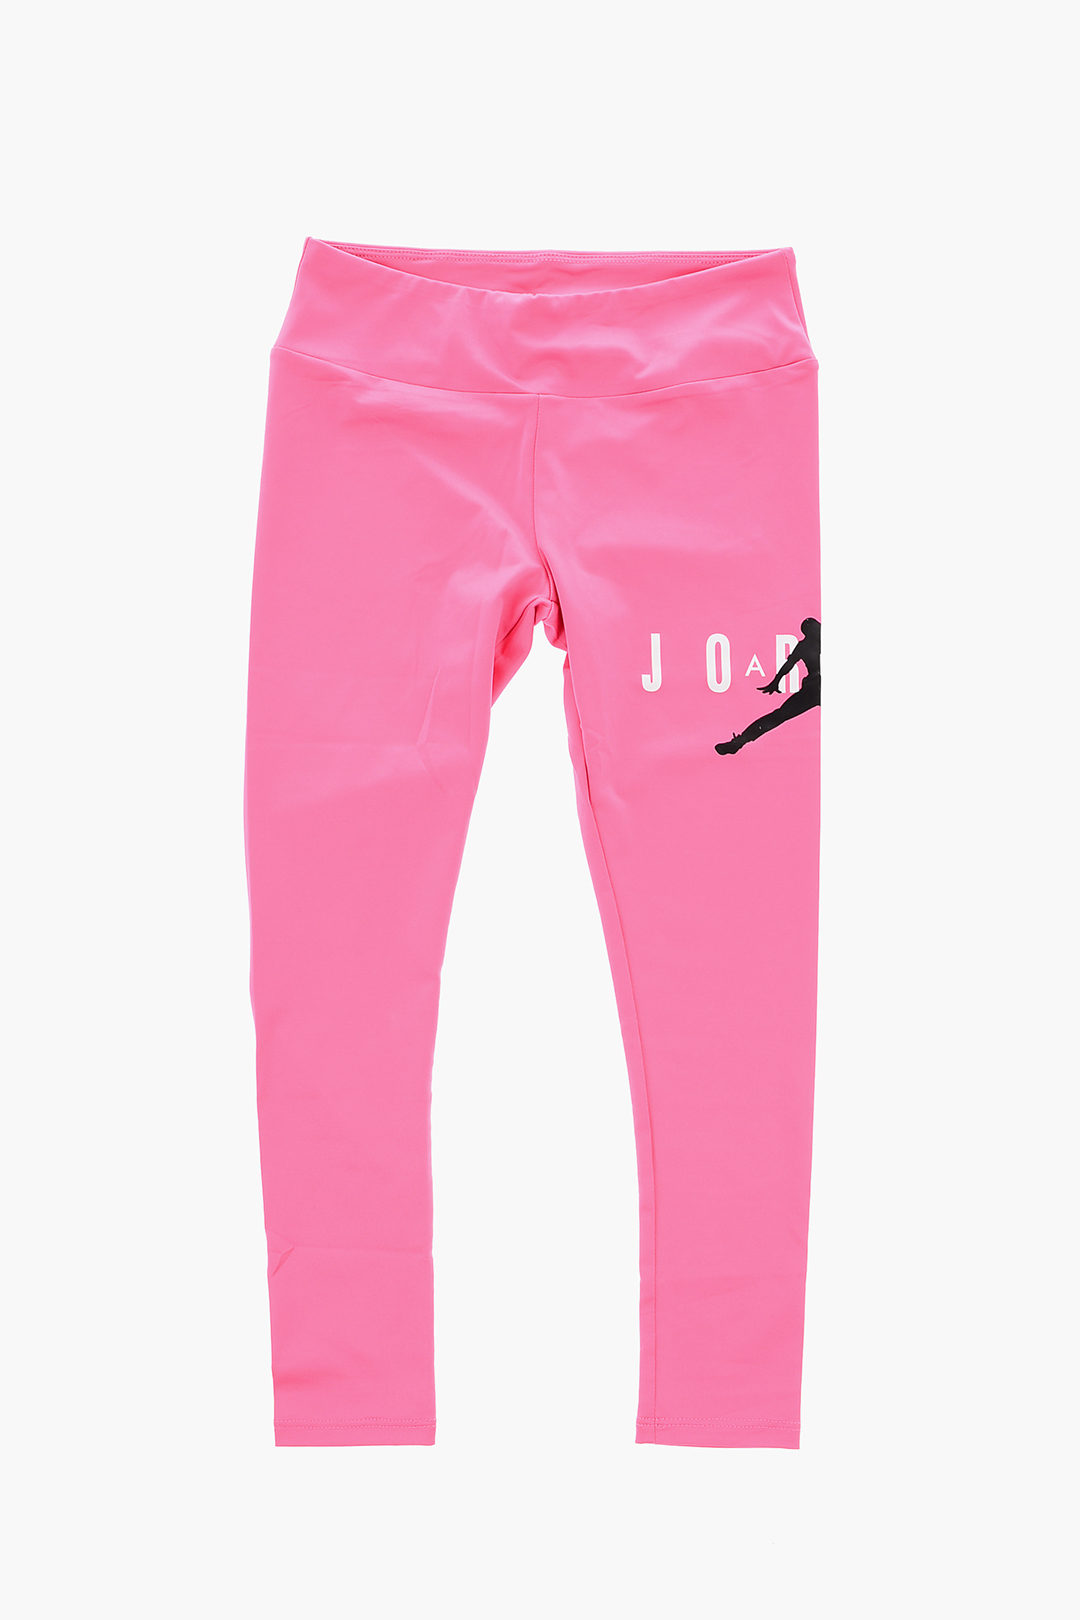 Nike KIDS AIR JORDAN Contarsting Logo Print Solid Color Leggings girls -  Glamood Outlet